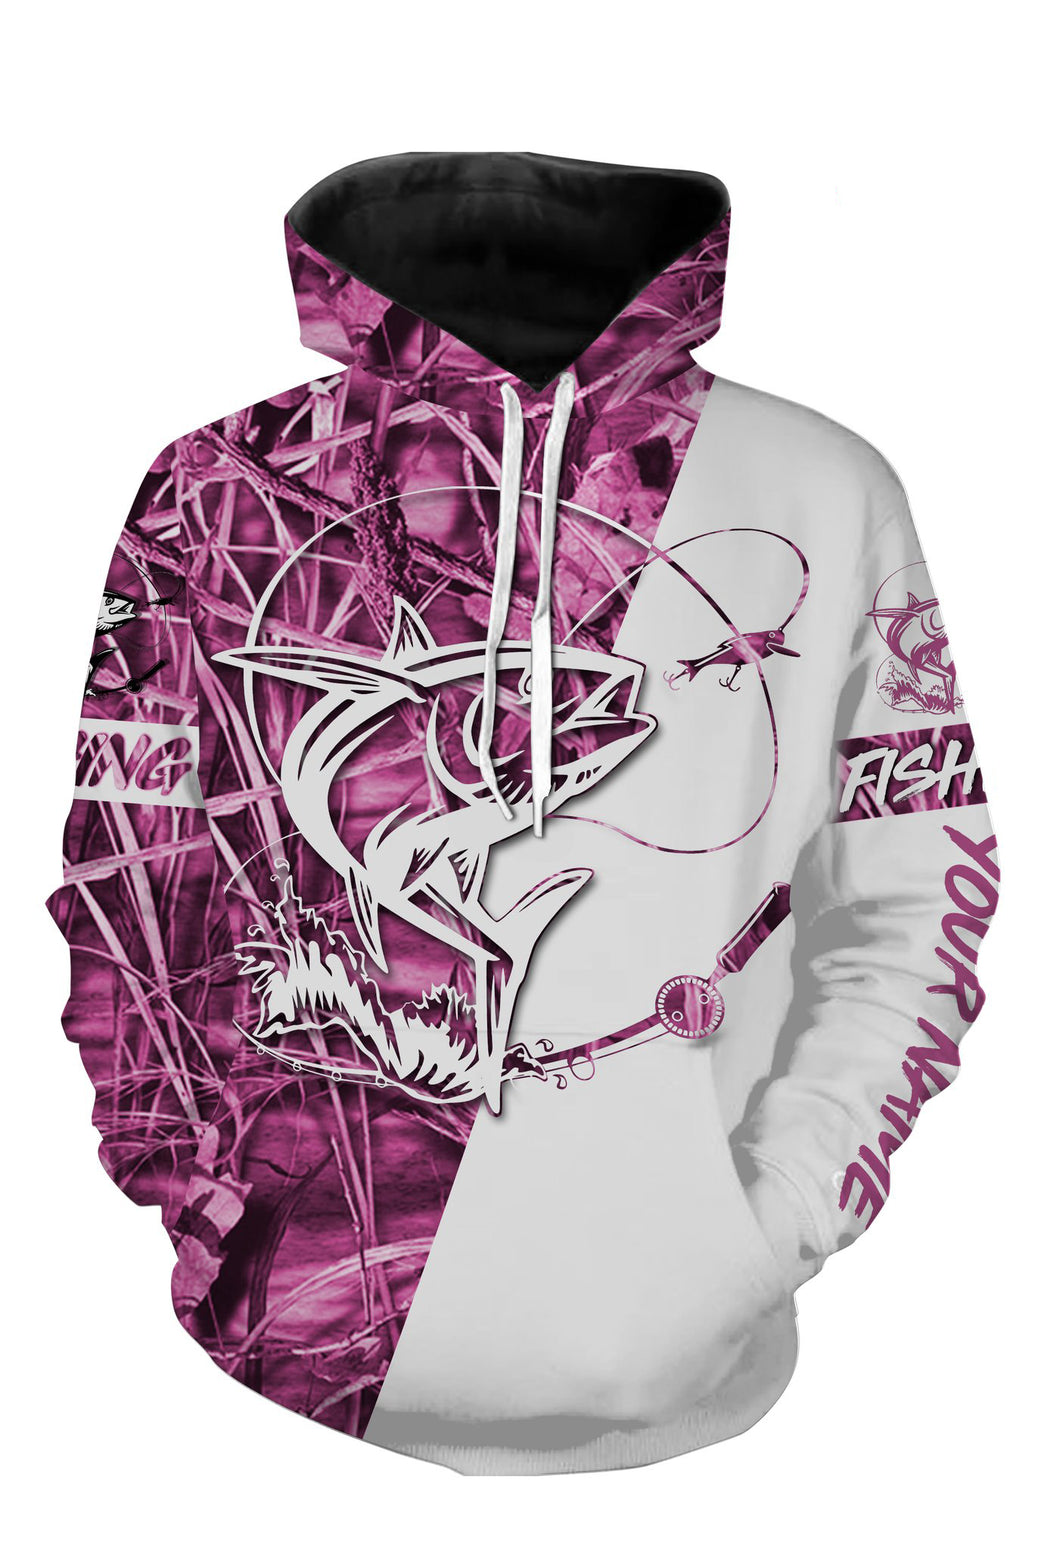 Personalized tuna fishing pink tattoo full printing shirt, hoodie, long sleeves